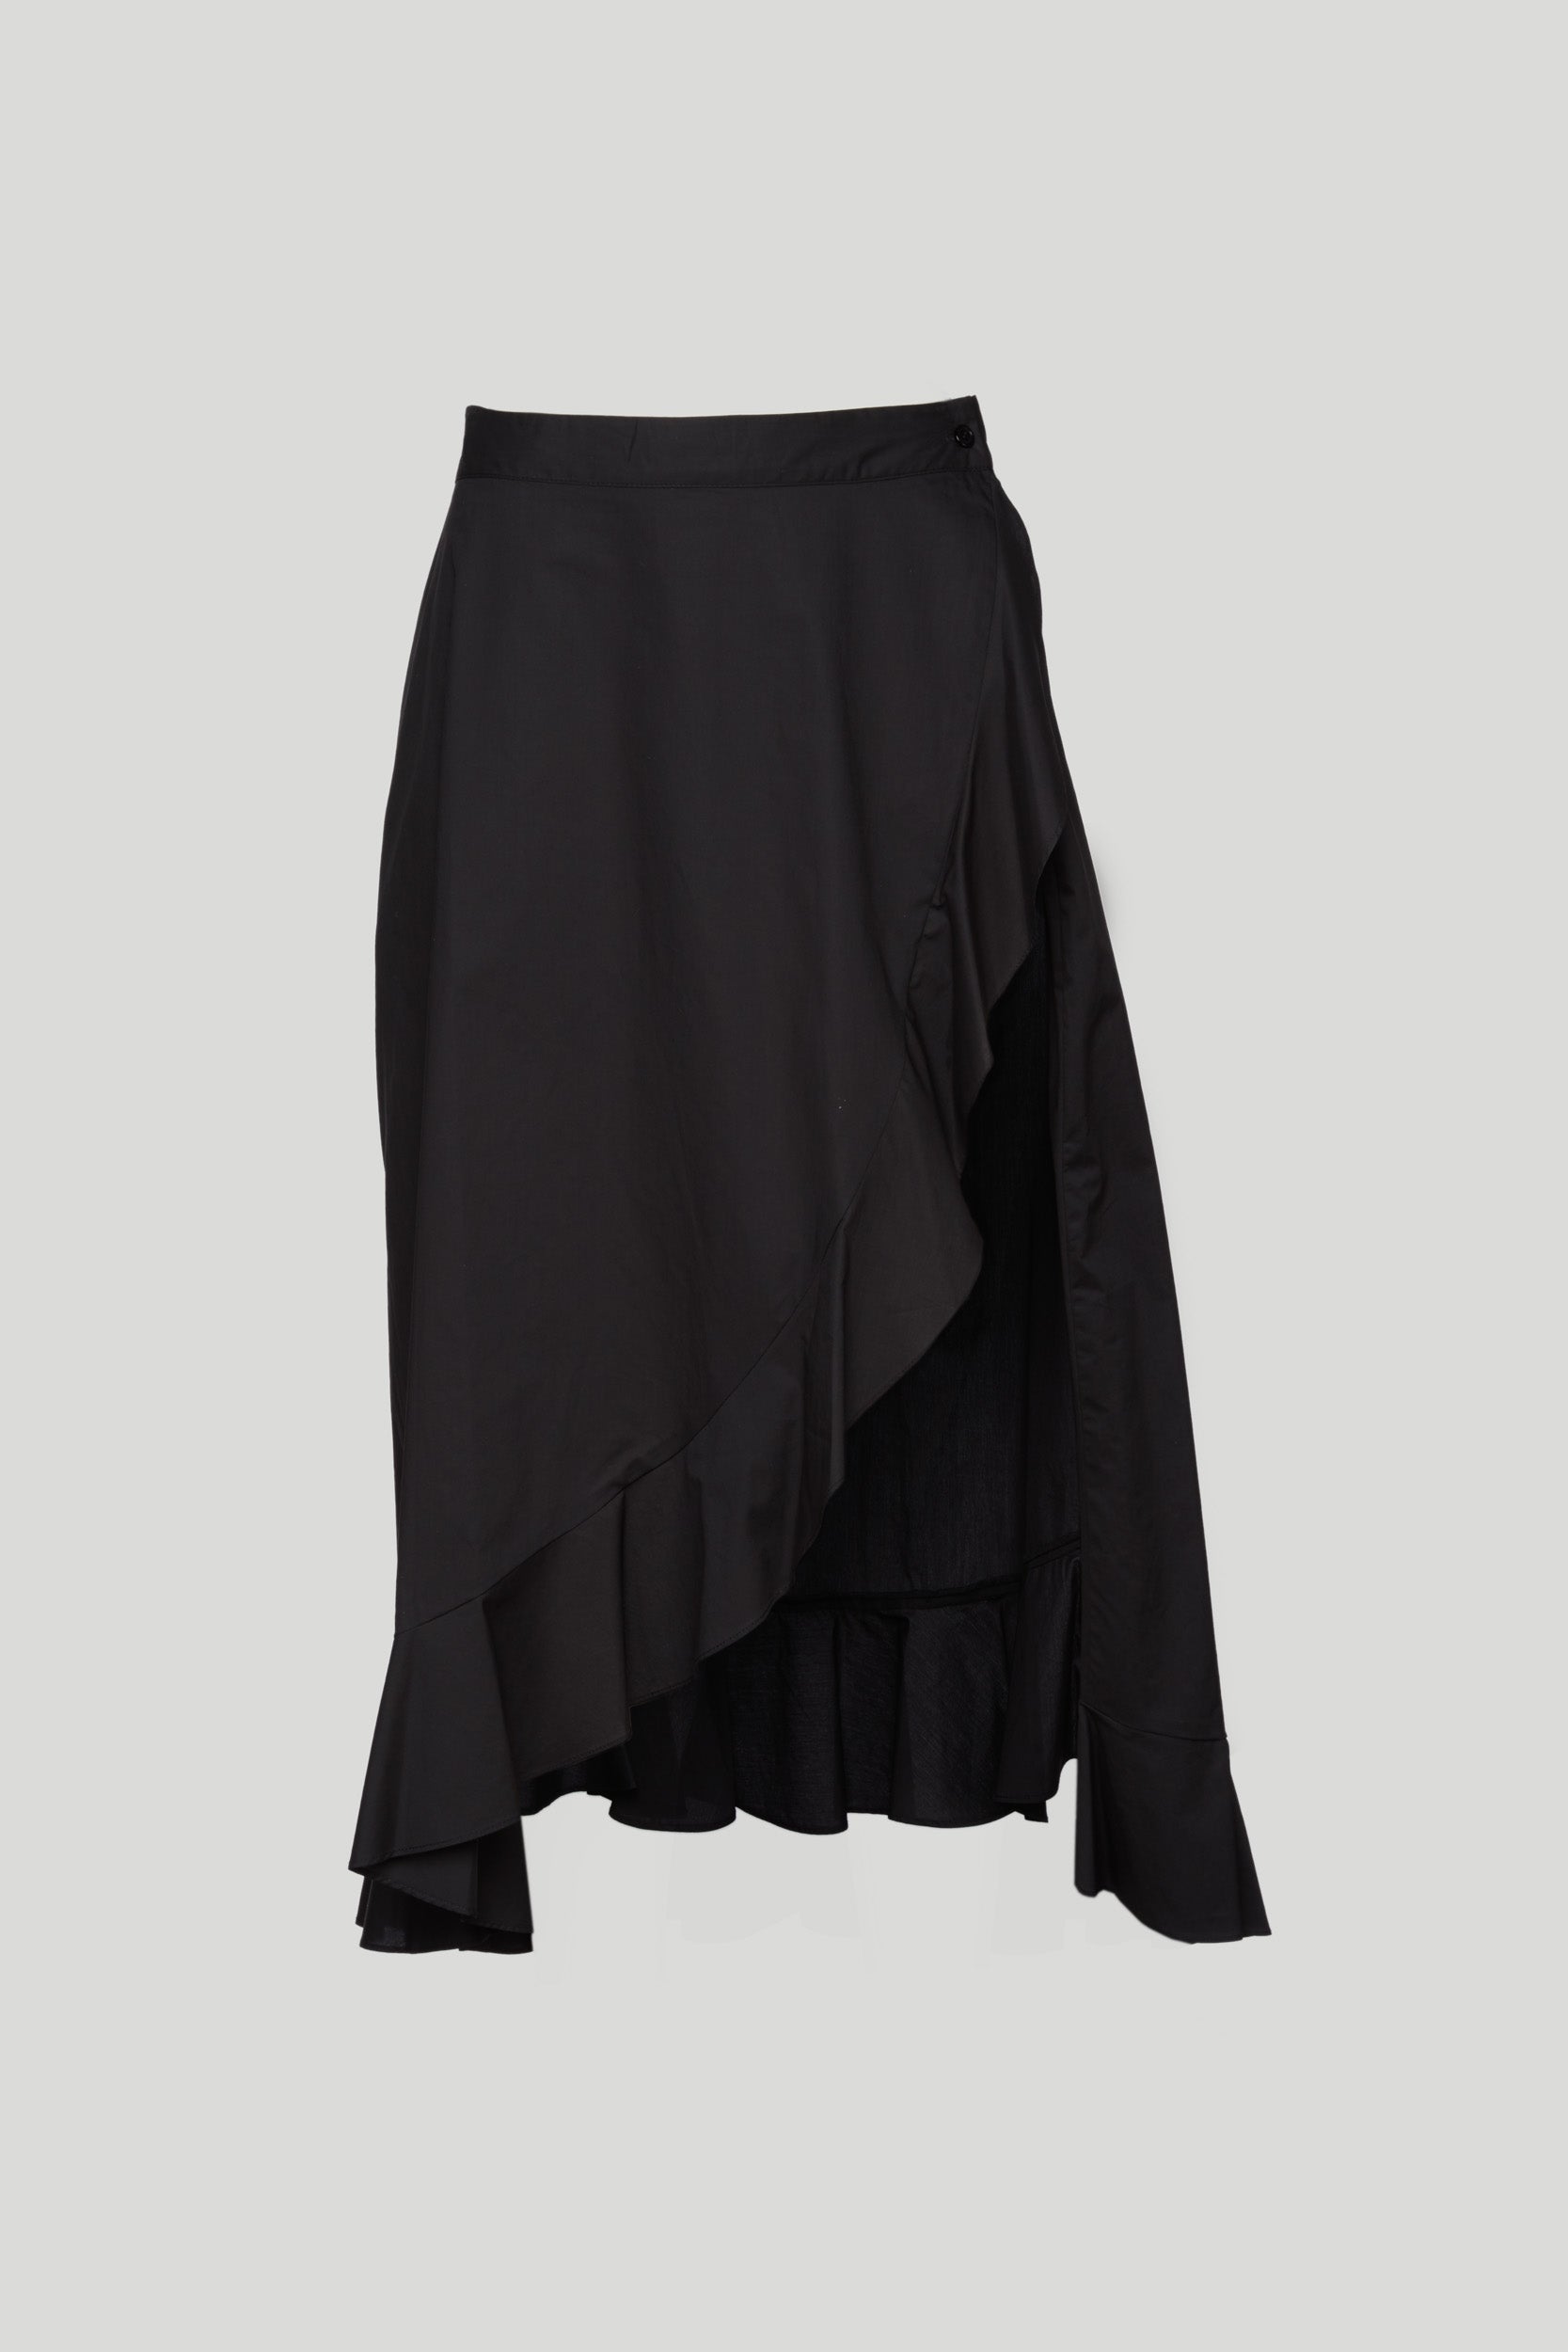 PINKO Black wallet skirt